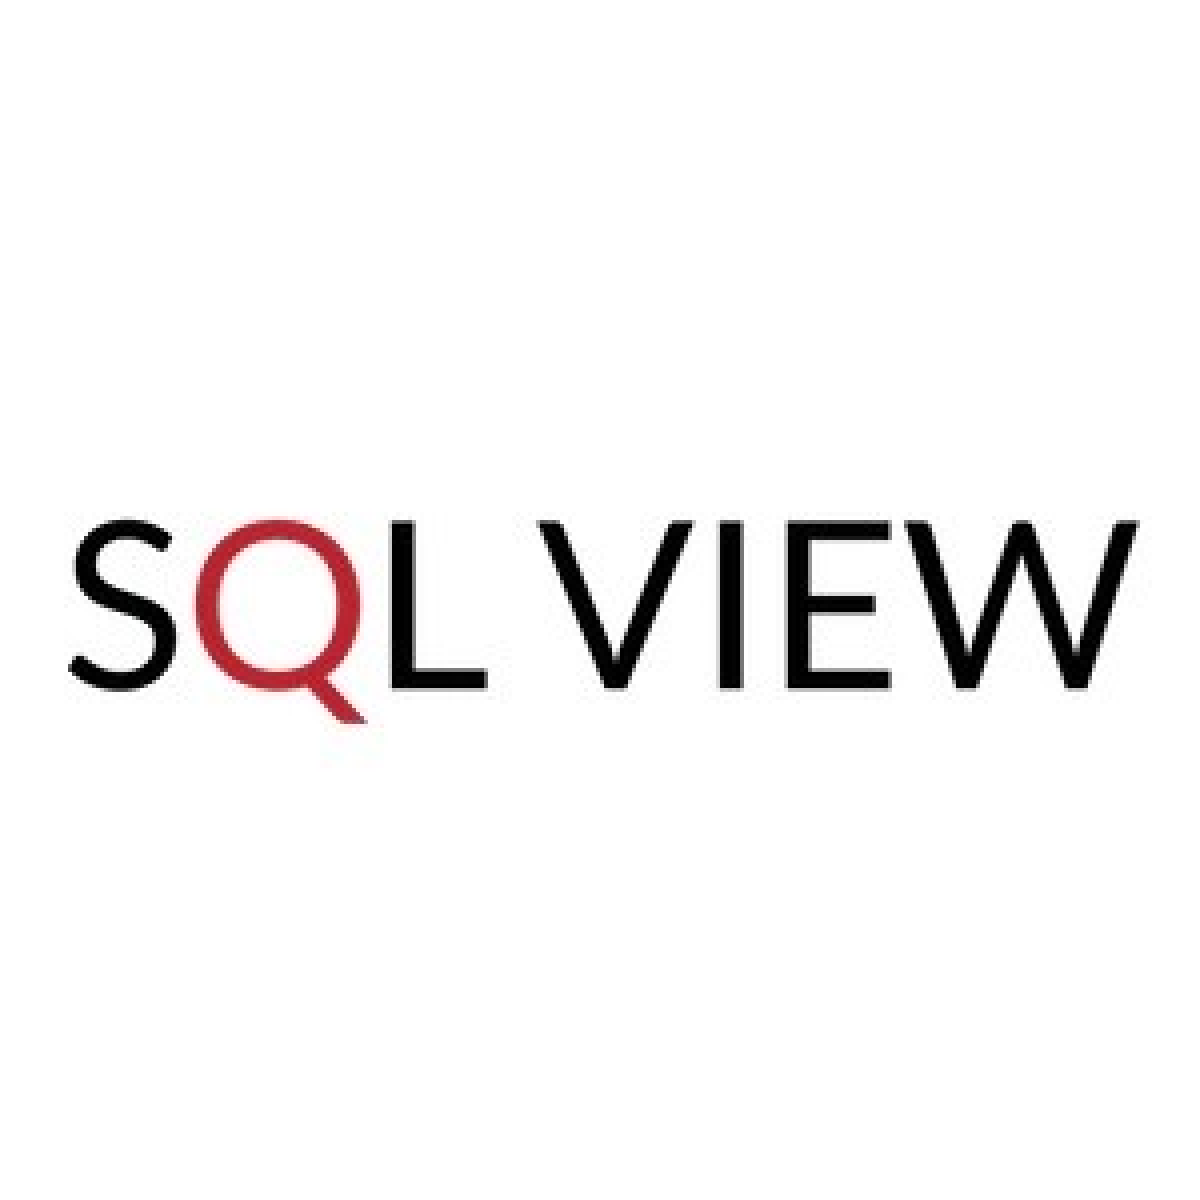 SQL View